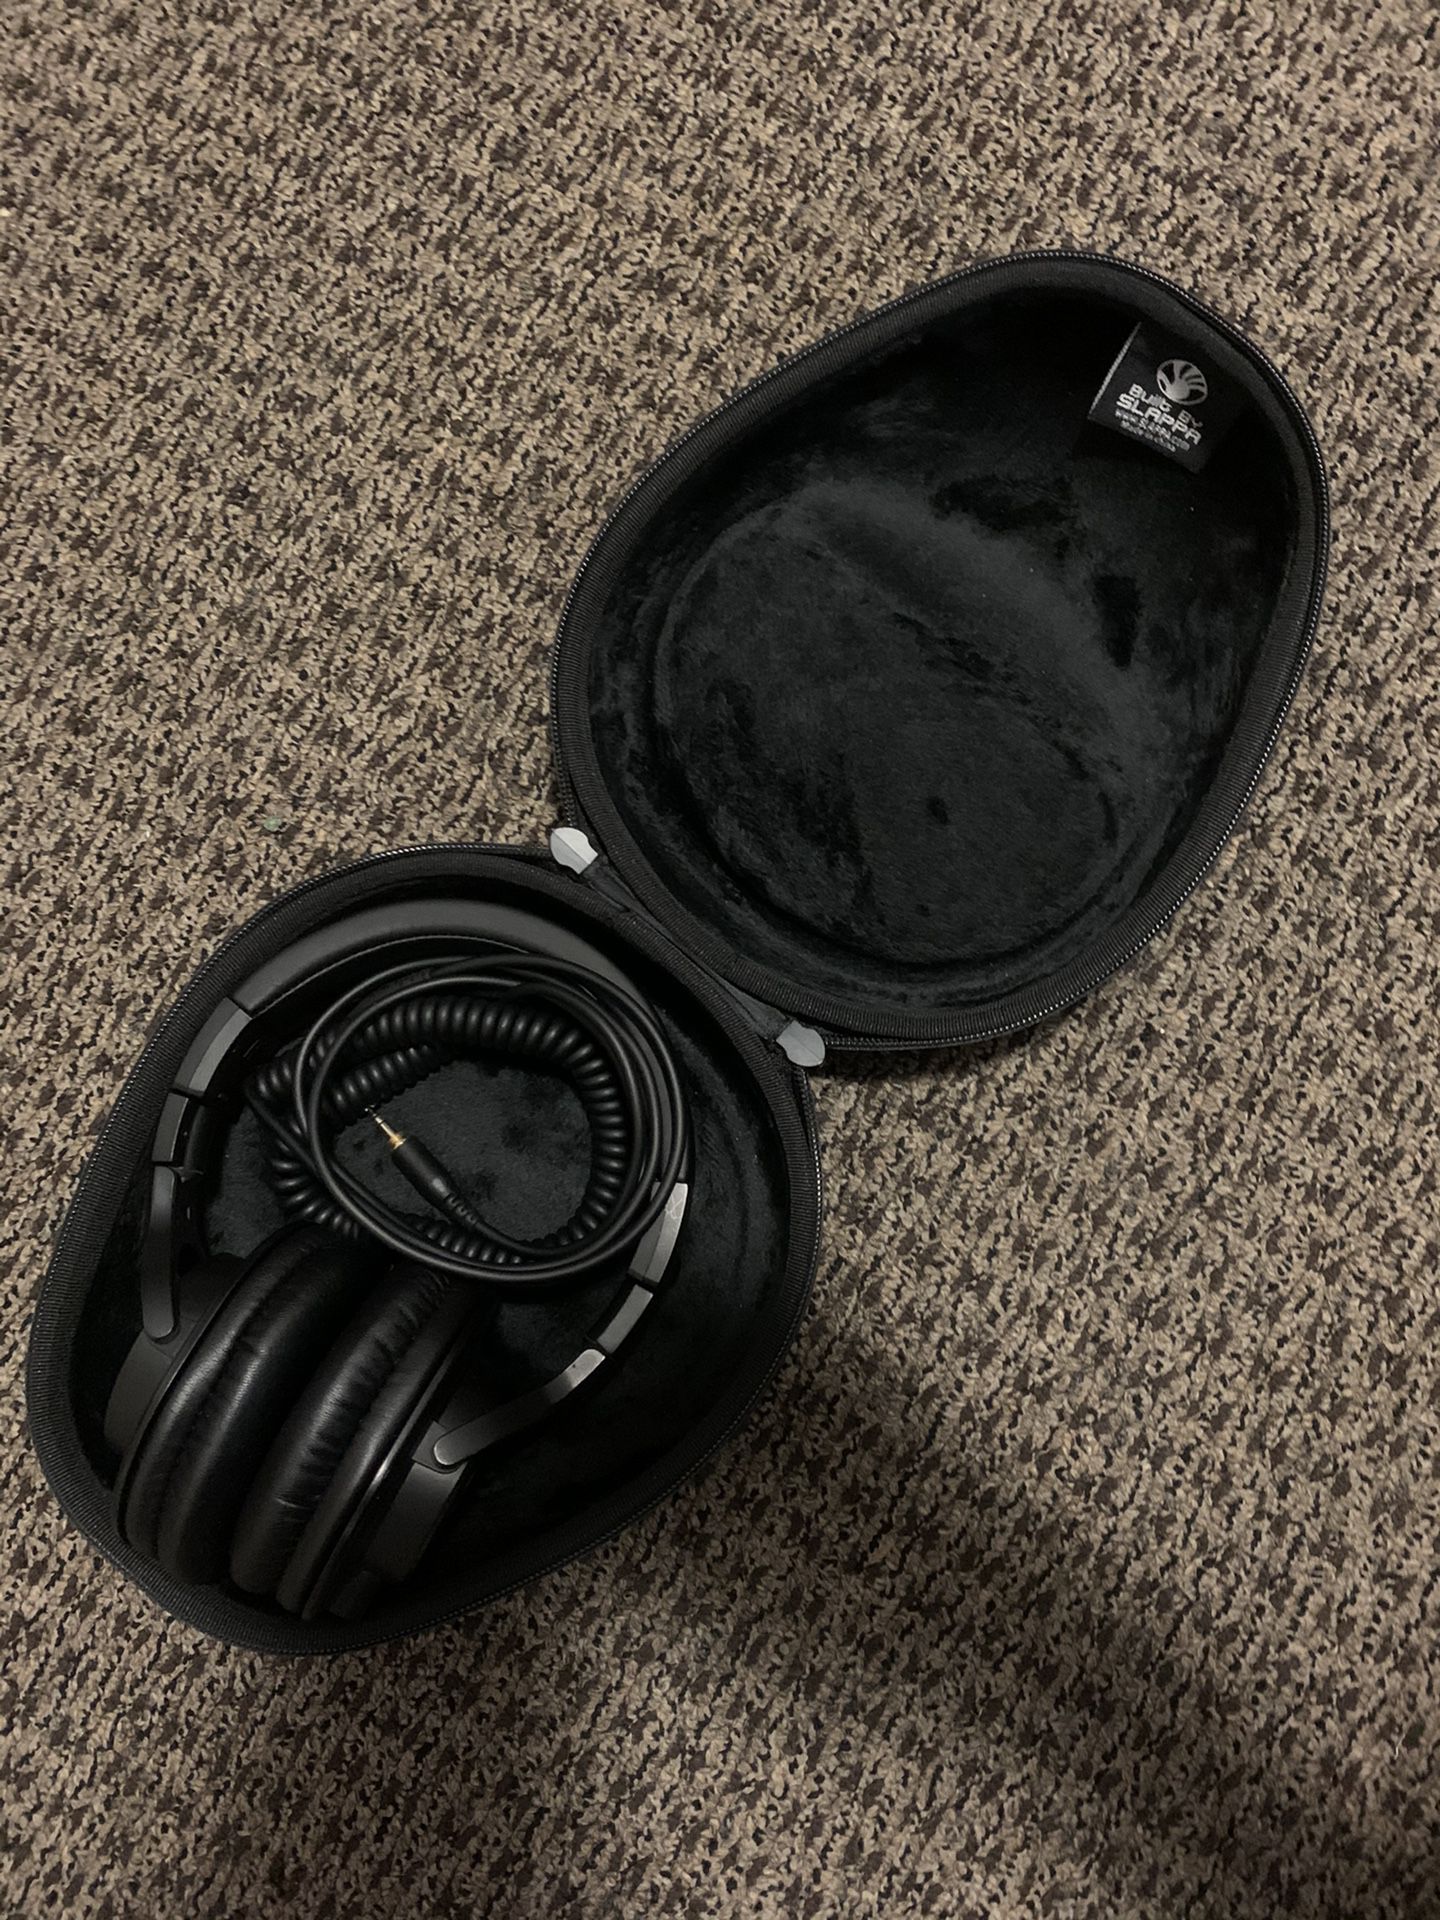 Audio Technica ATH-M40x Headphones + Hard Headphones Case